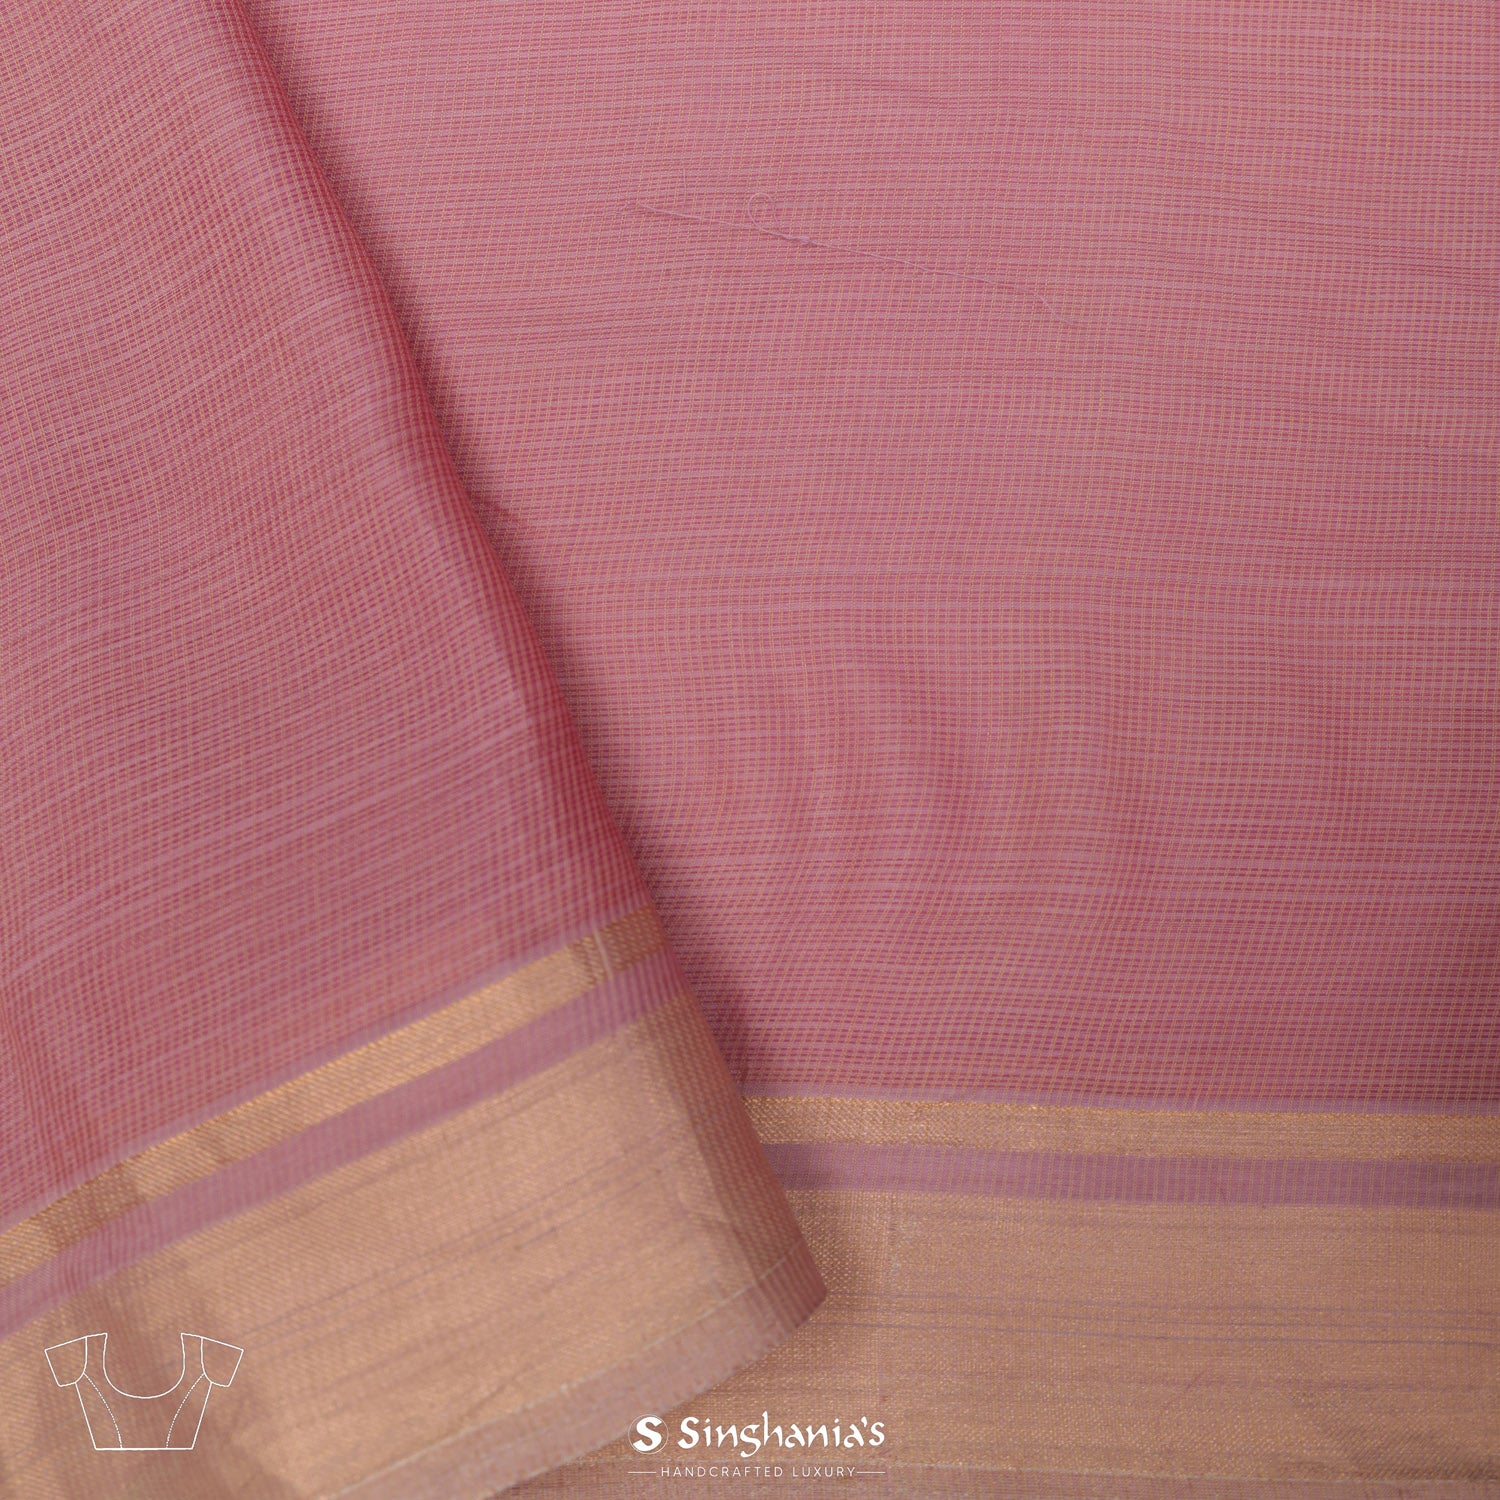 Light Pink Kota Silk Saree With Mukaish Work In Floral Pattern